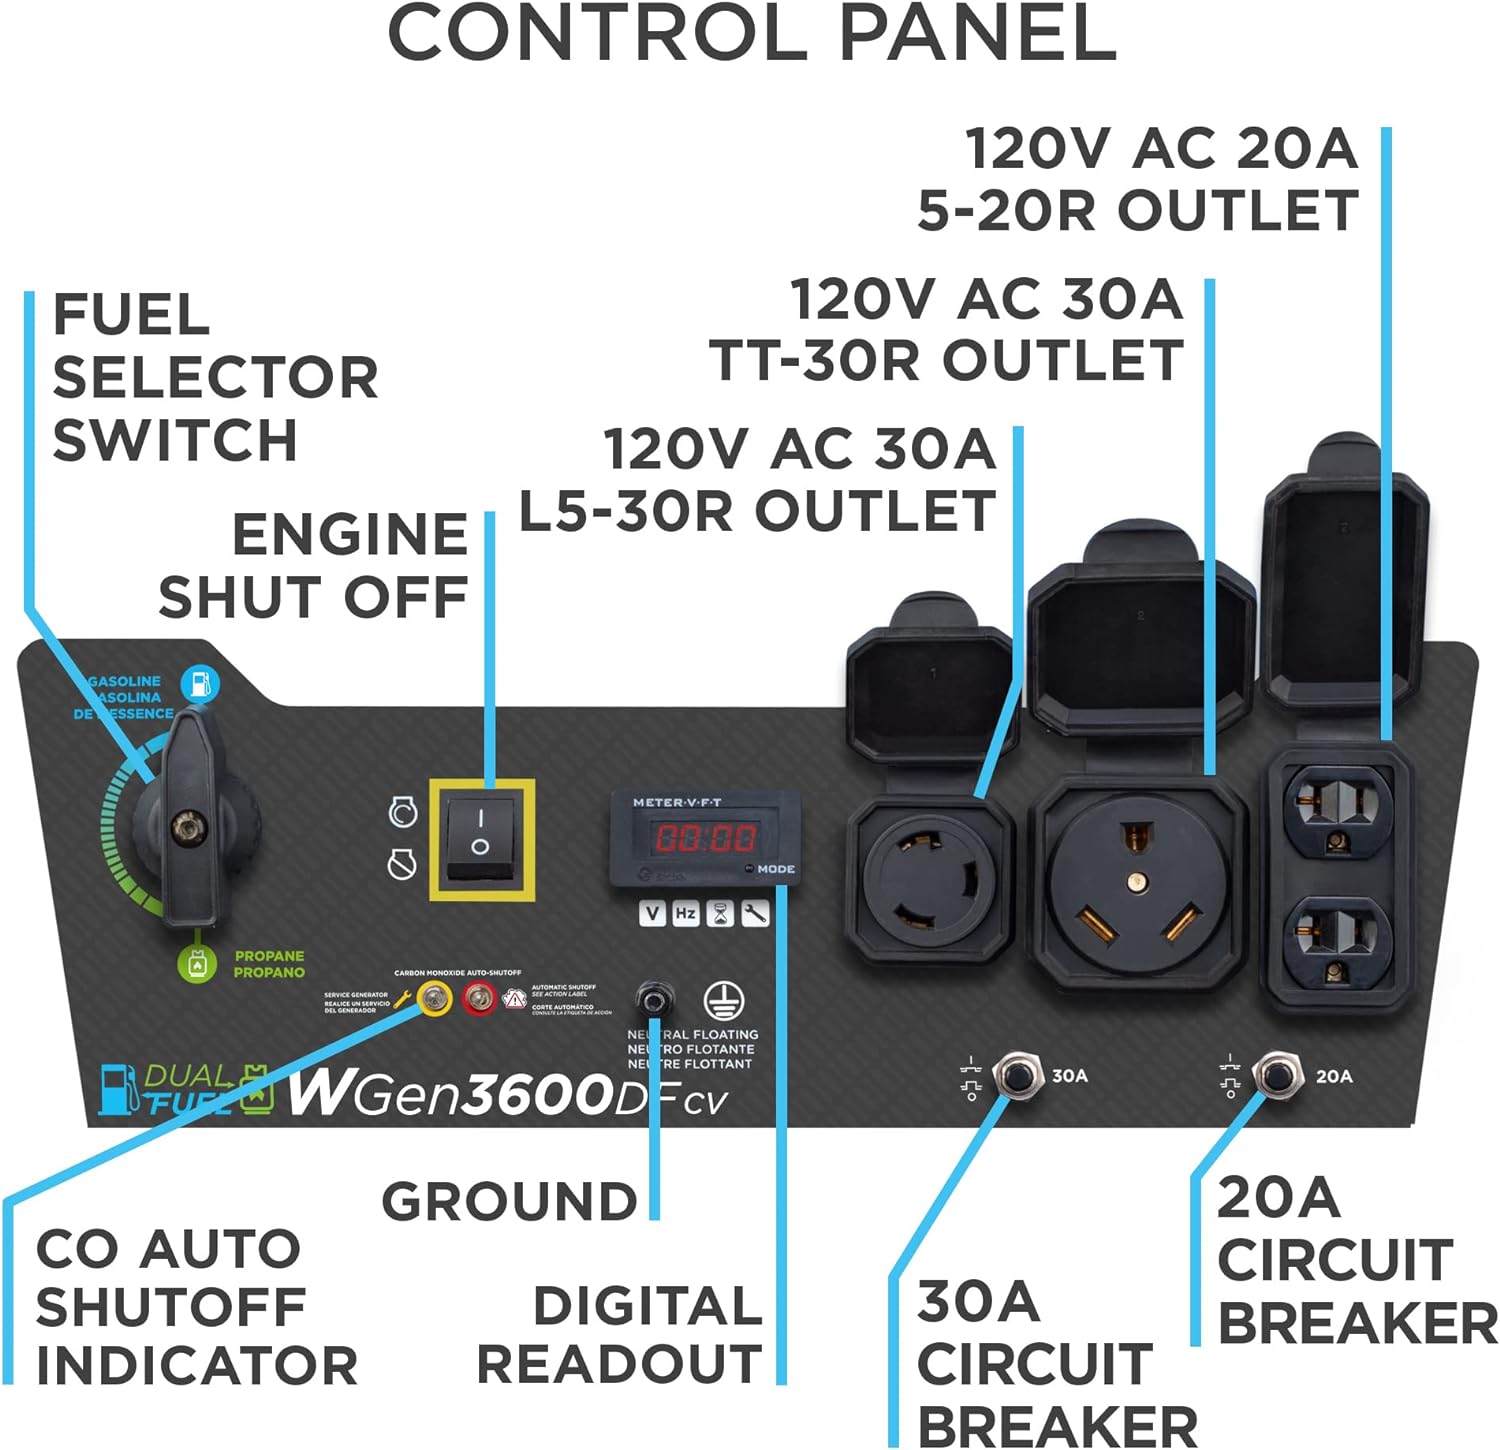 Westinghouse WGen3600DFcv Generator 3600W/4650W 30 Amp Recoil Start Dual Fuel with CO Sensor New